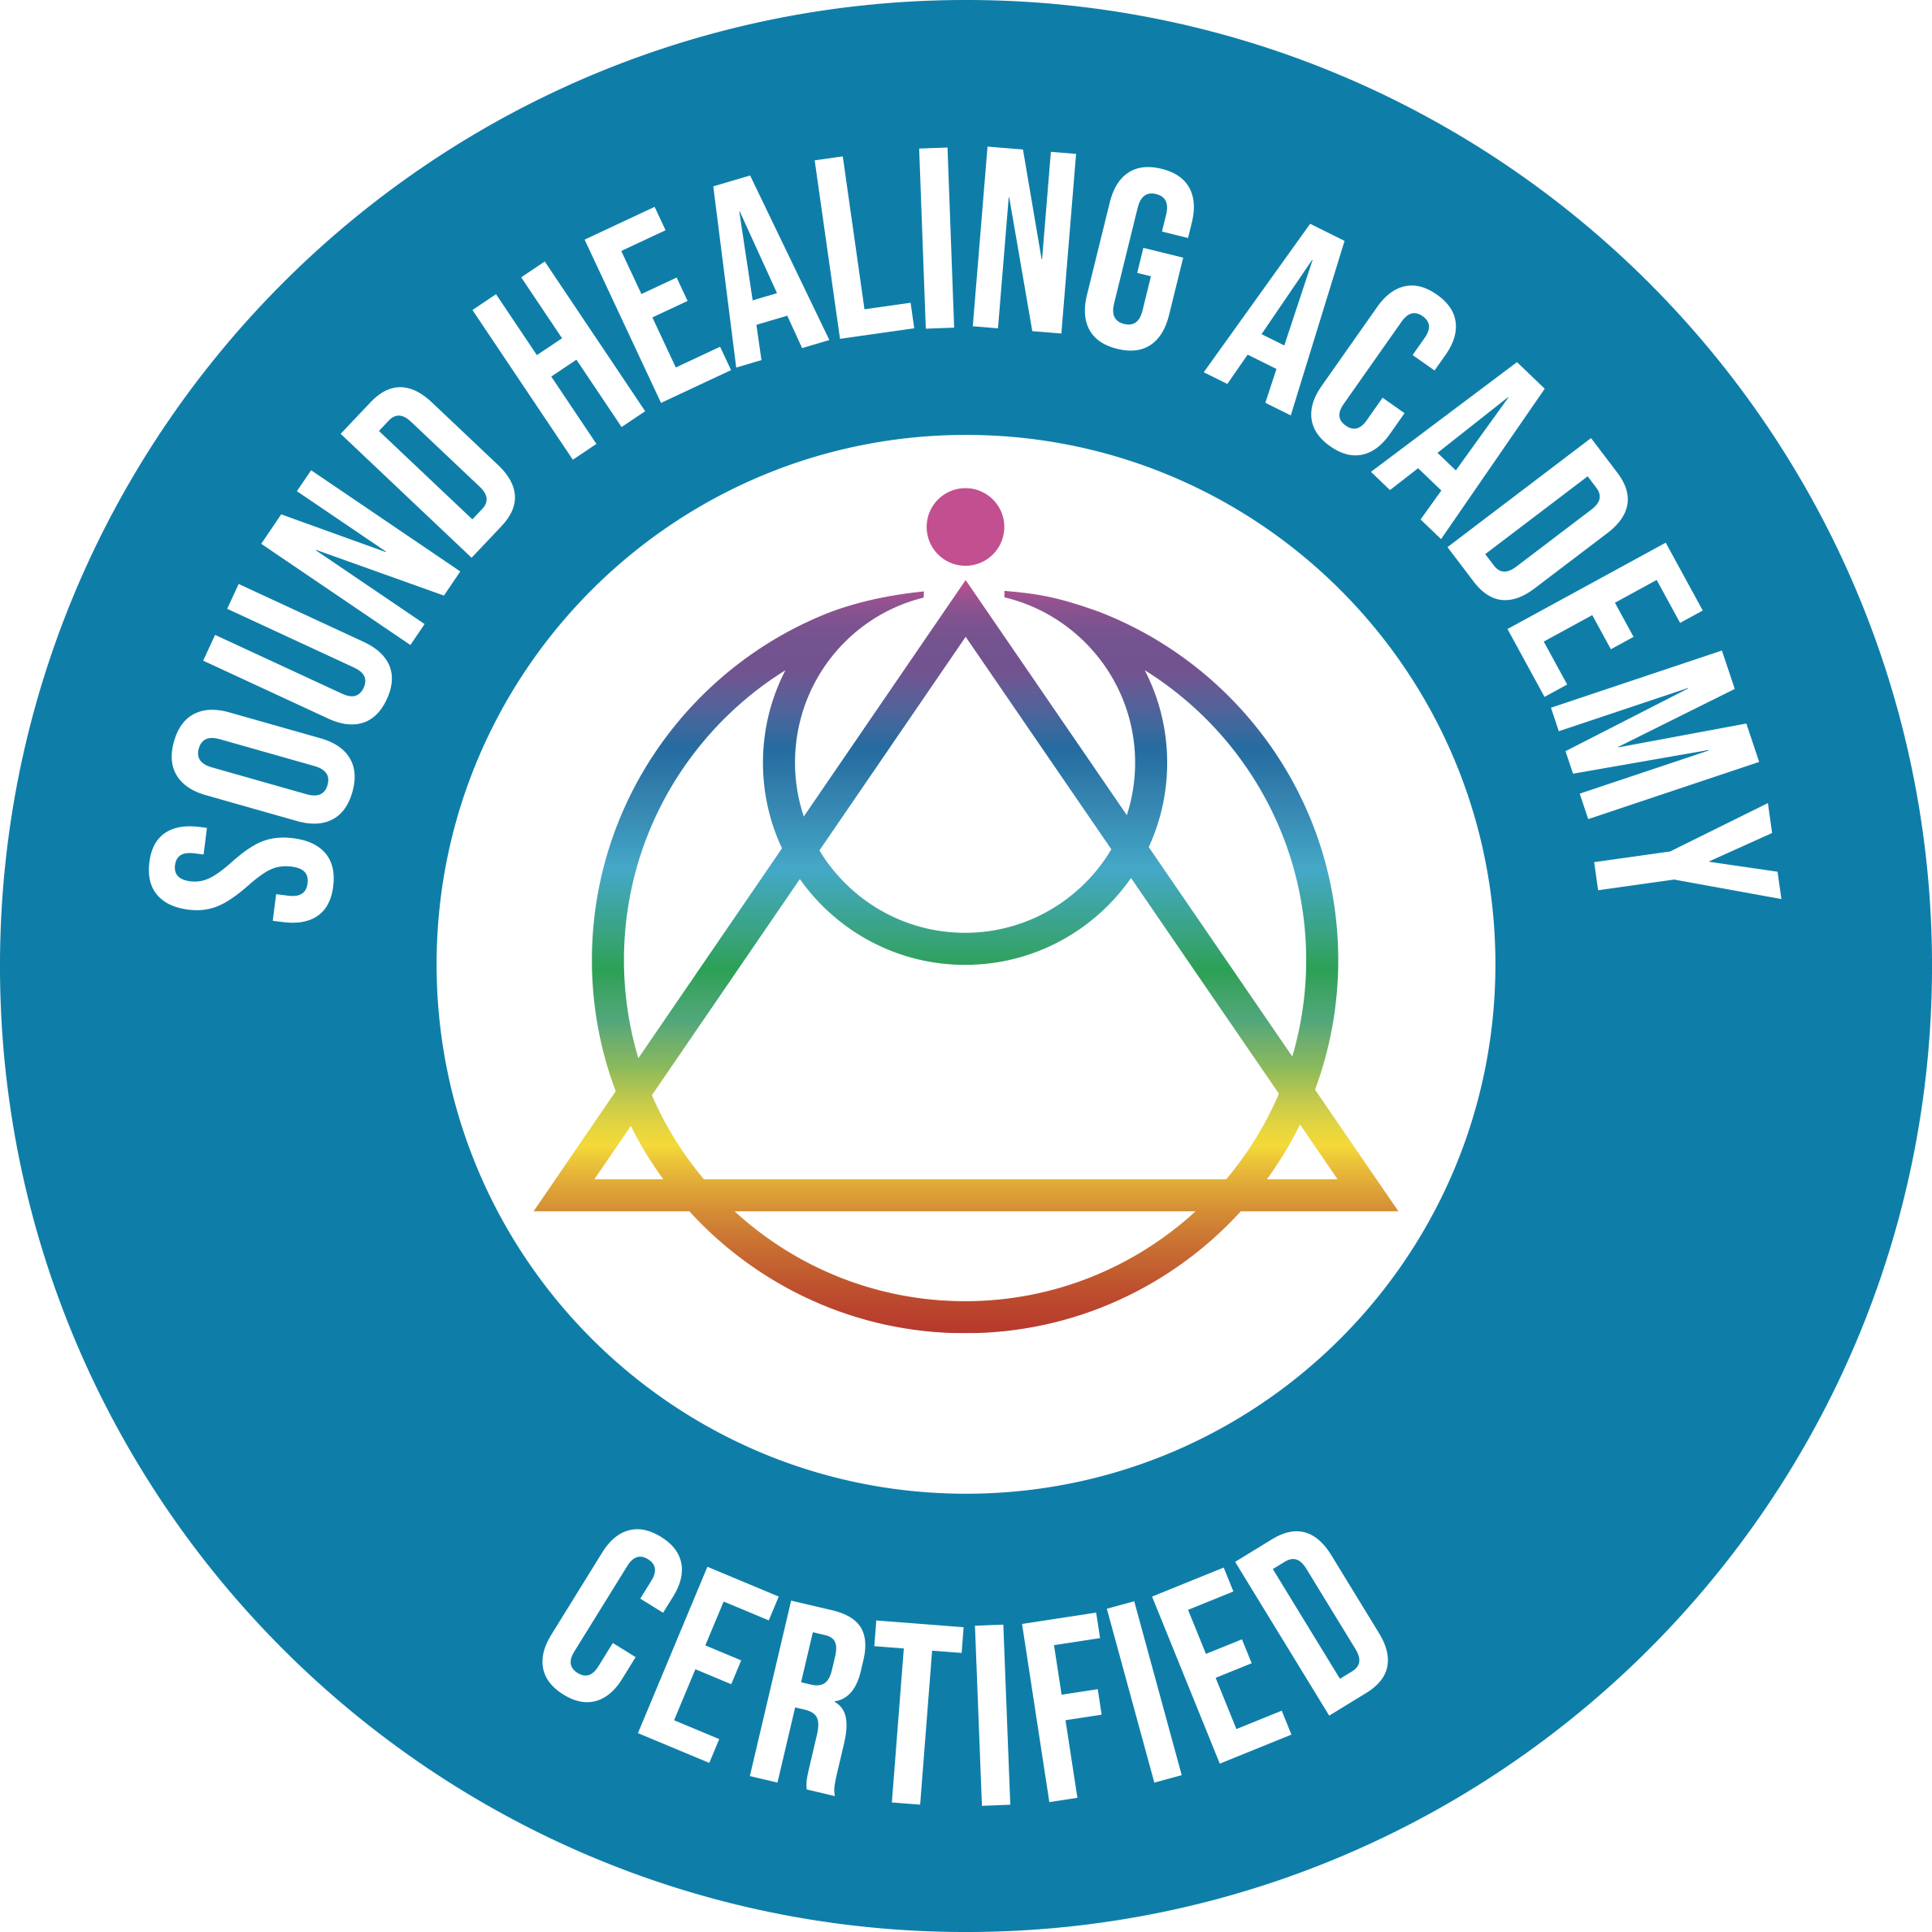 Sound Healing Academy Certified